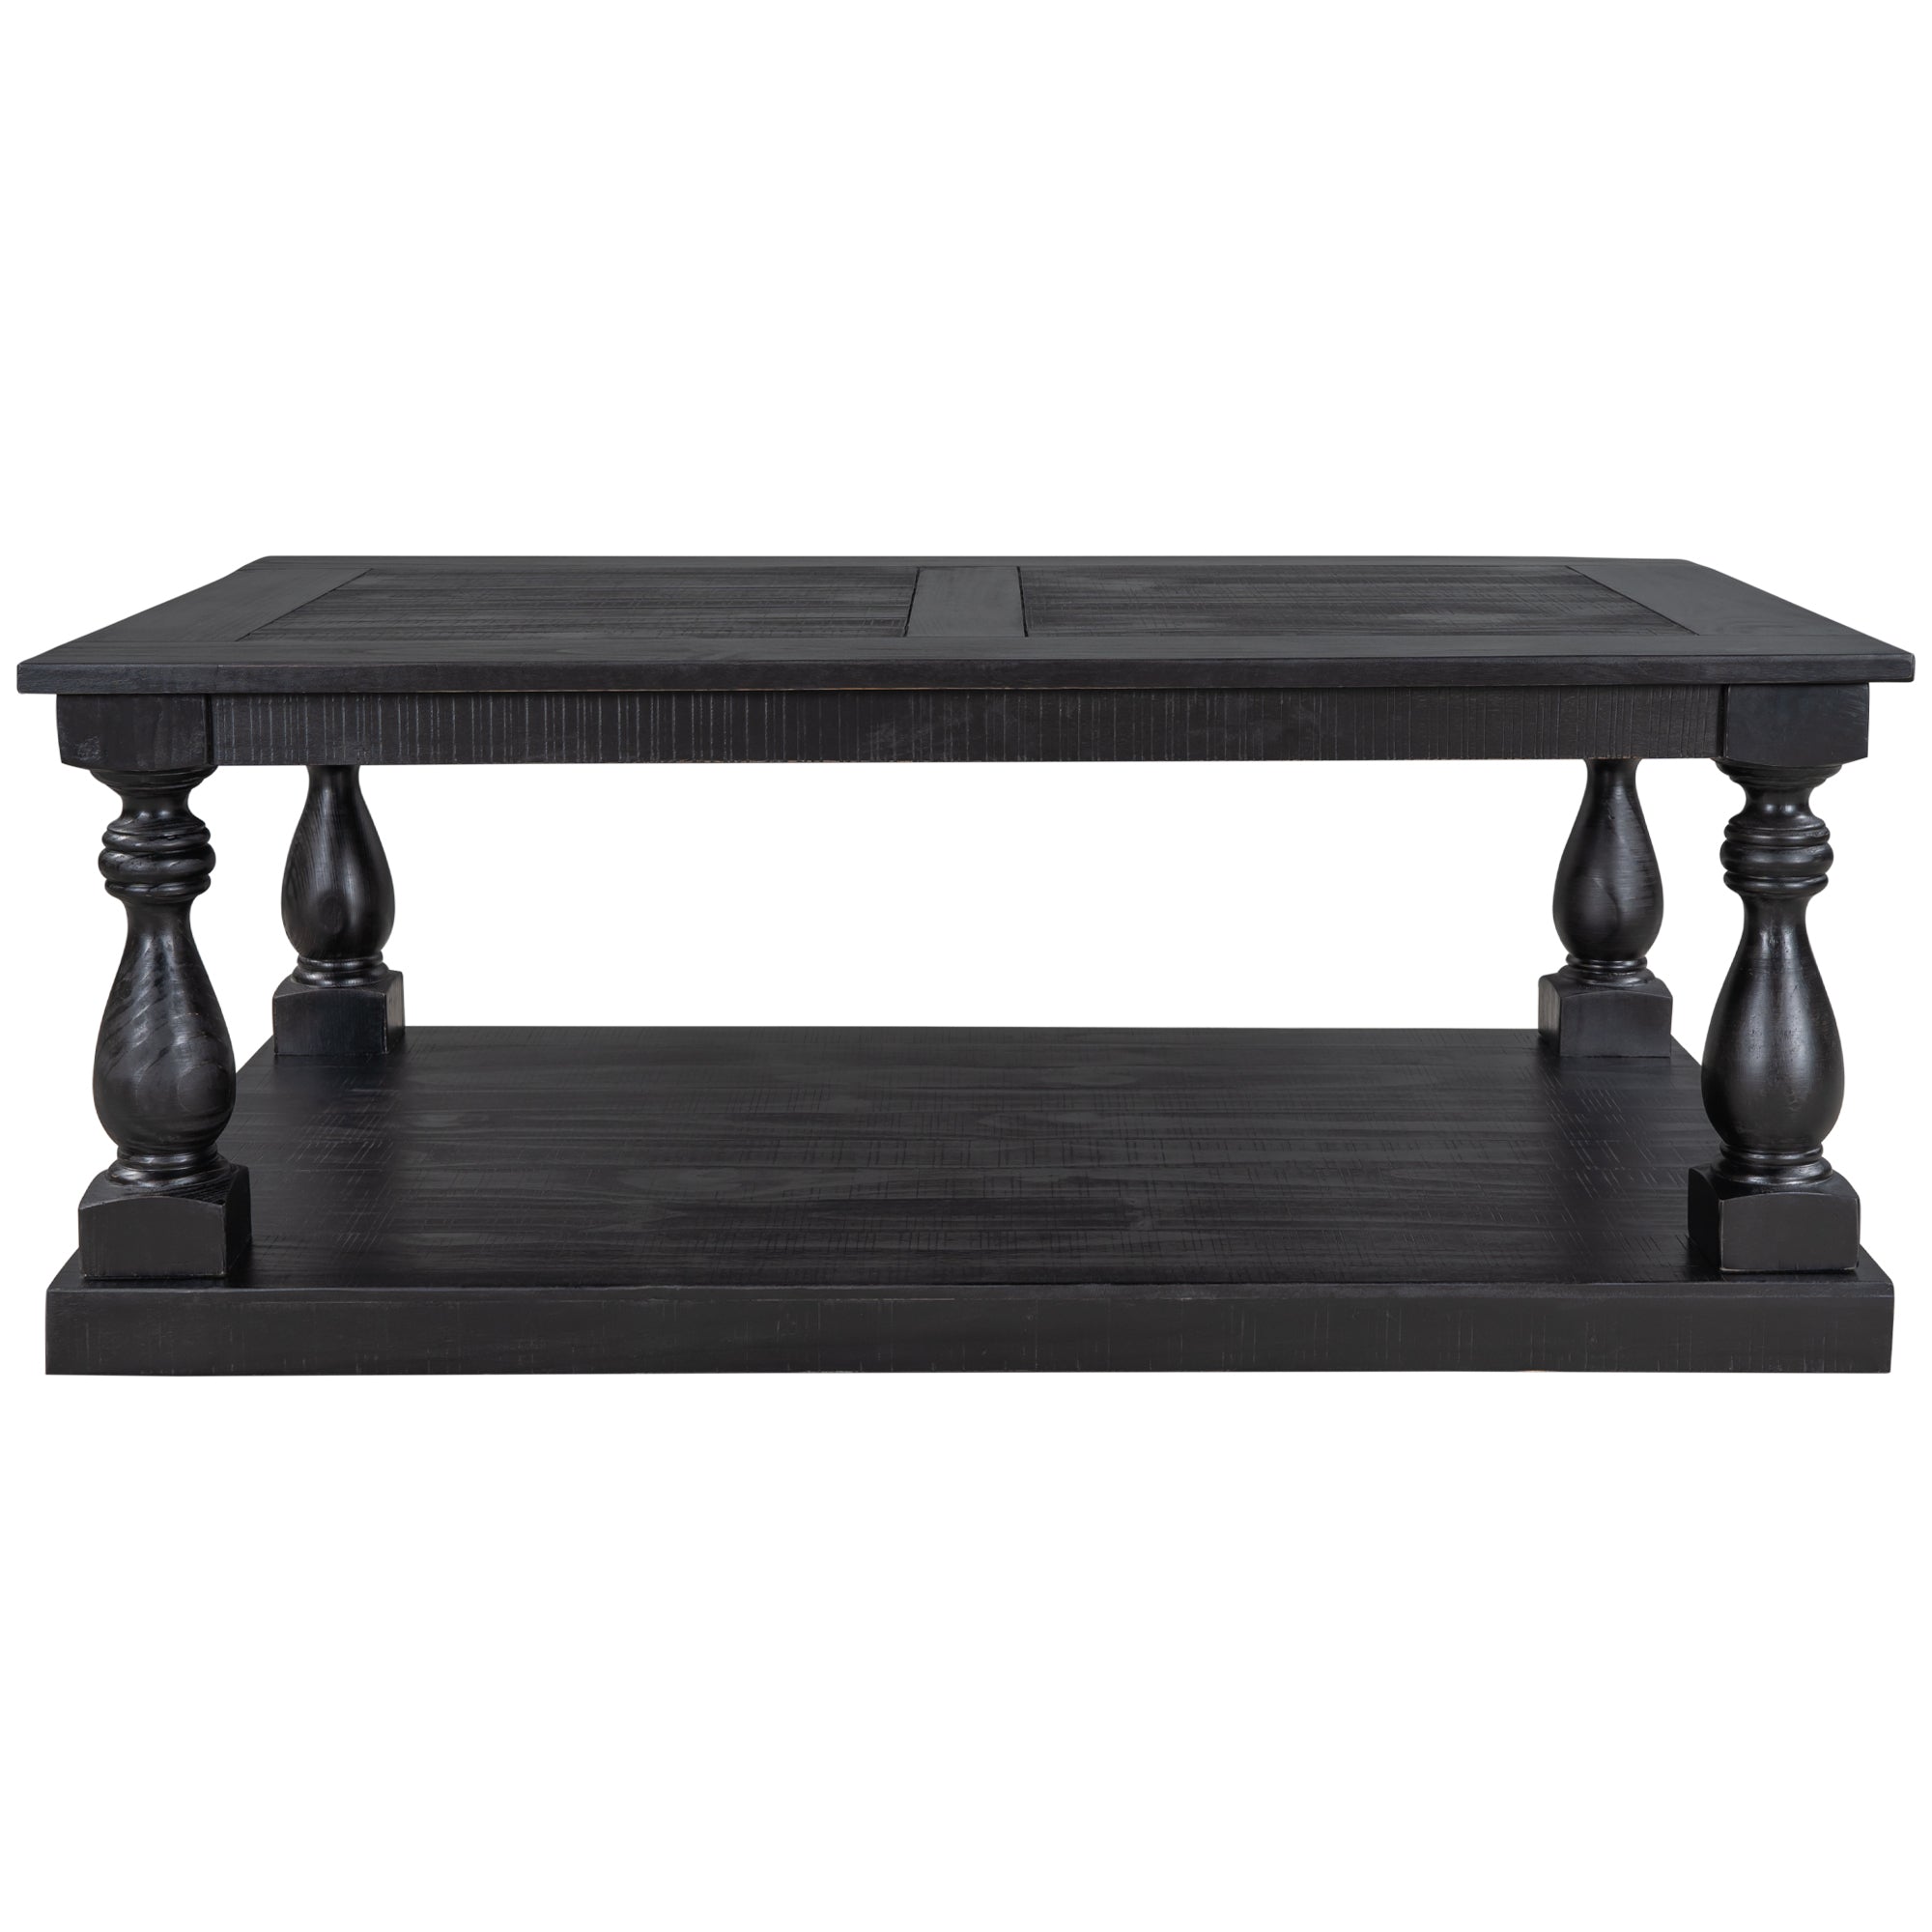 U STYLE Rustic Floor Shelf Coffee Table with black-pine